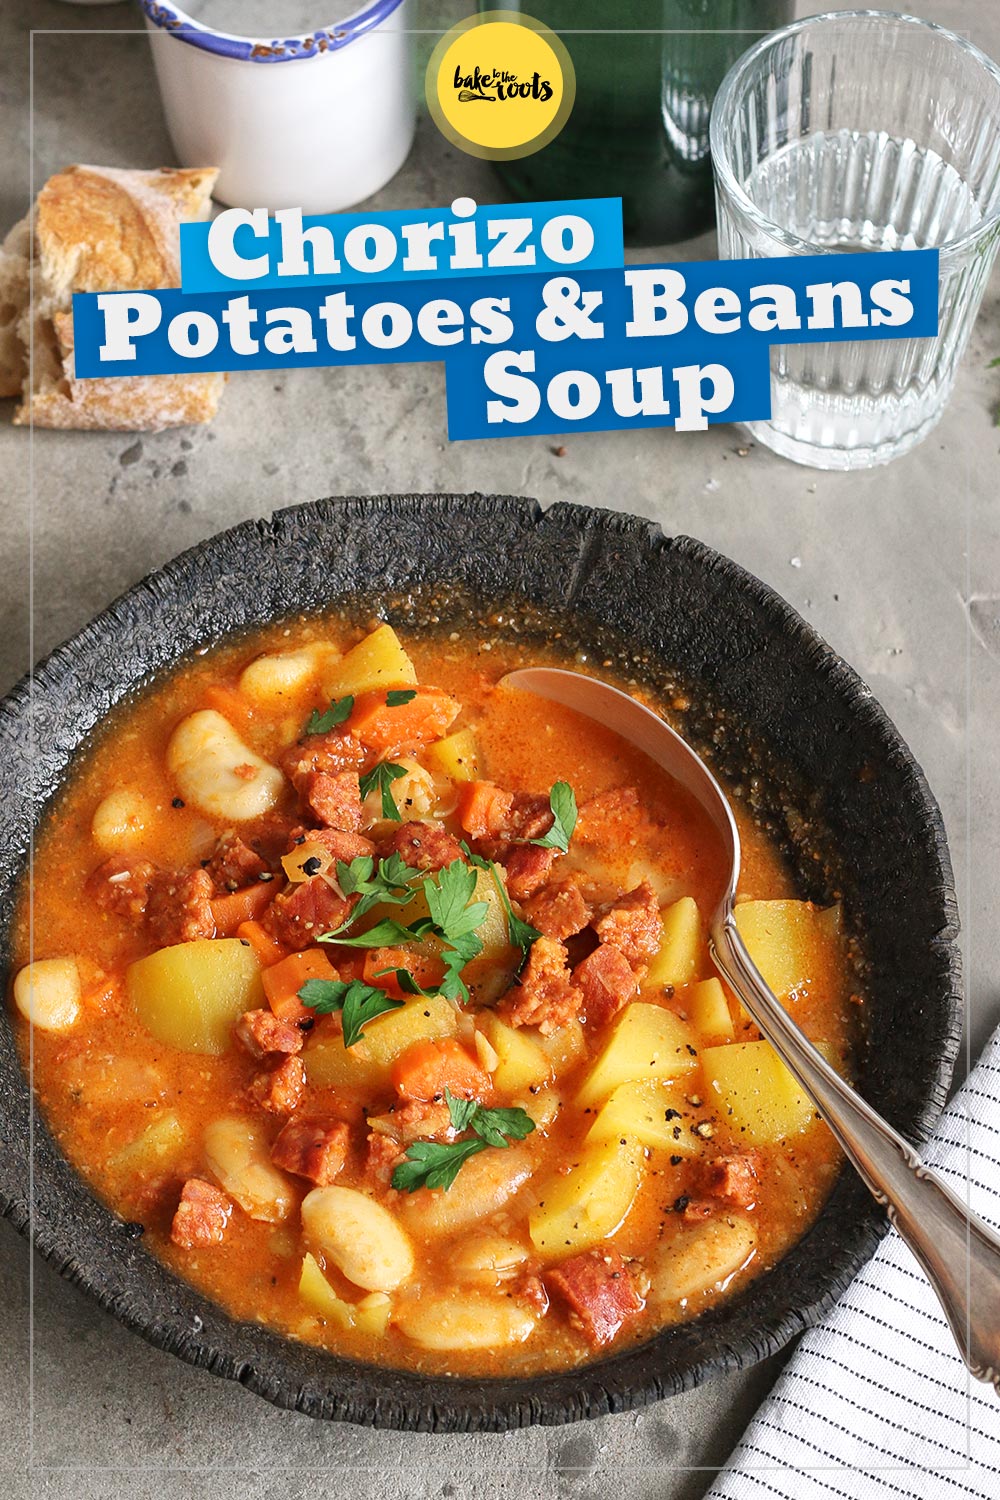 White Beans, Potato & Chorizo Soup | Bake to the roots